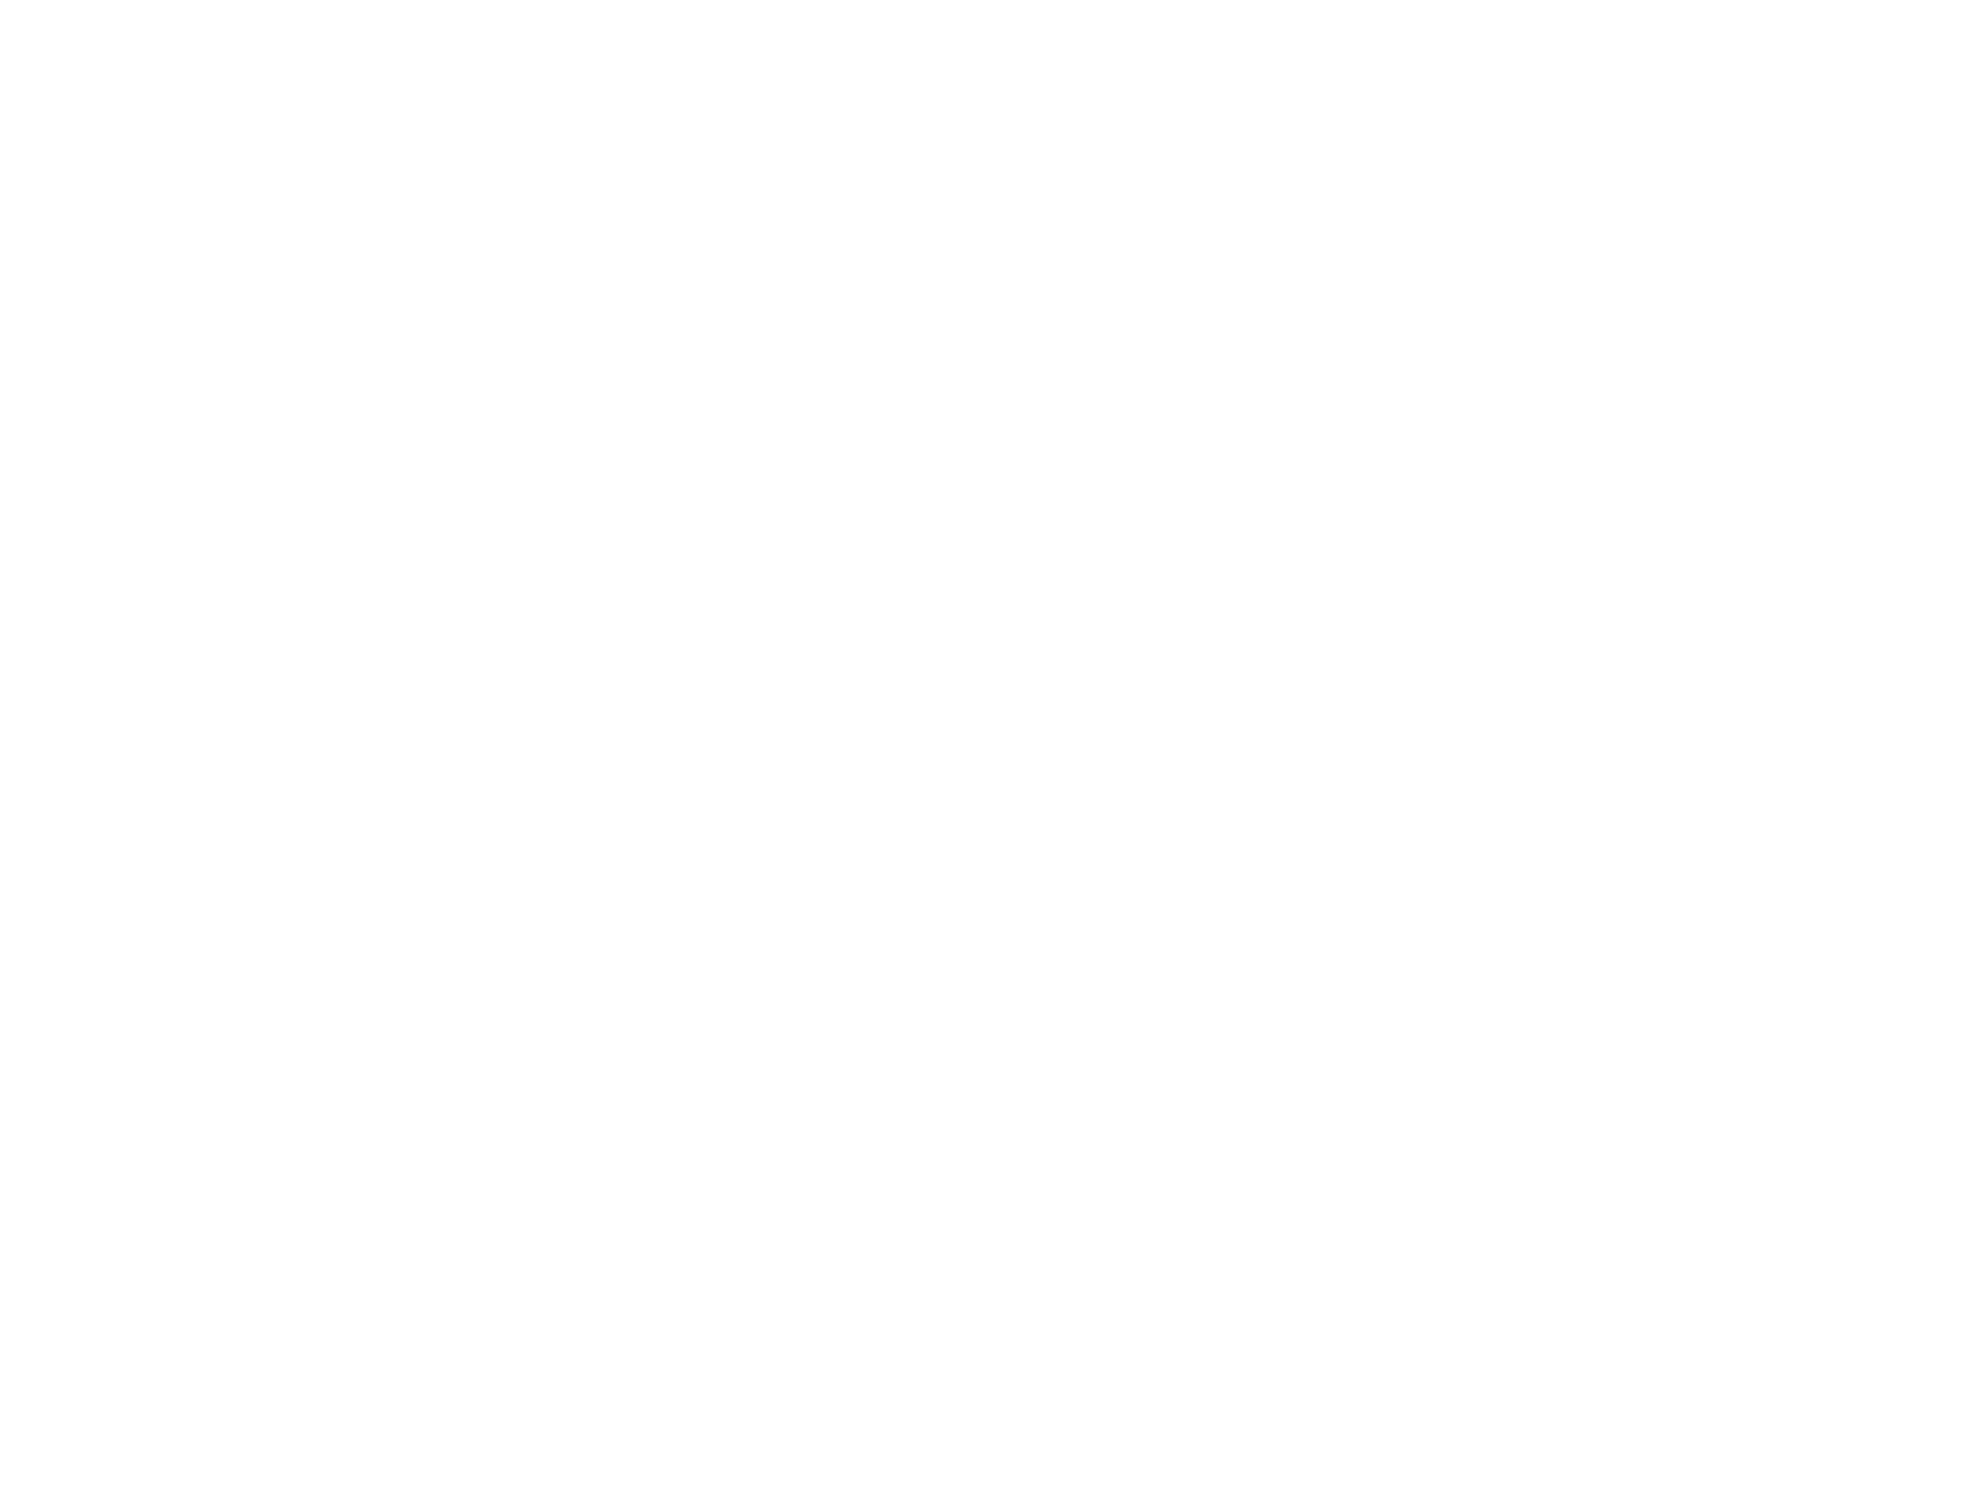 Manchester Council